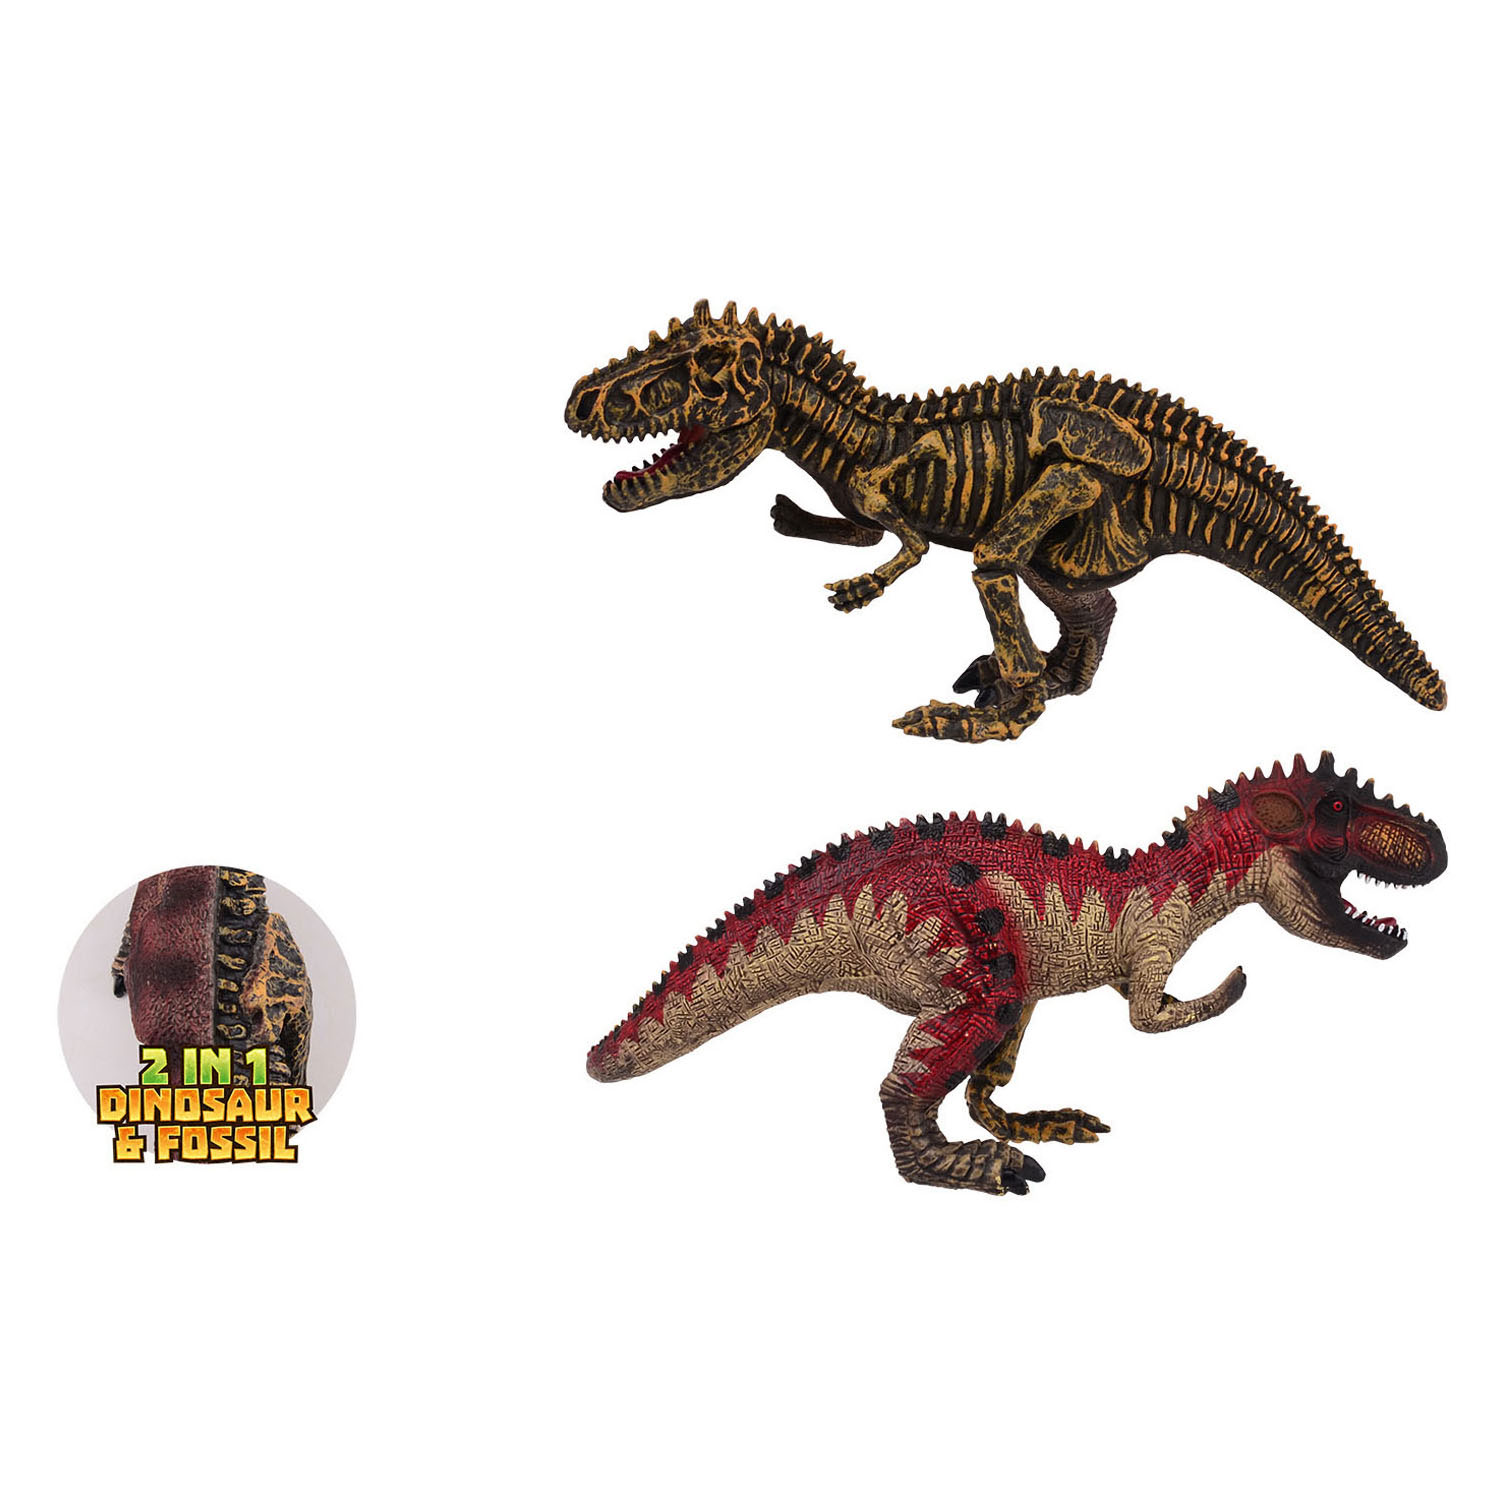 Animal World Tweezijdige Dino XL - Giganotosaurus